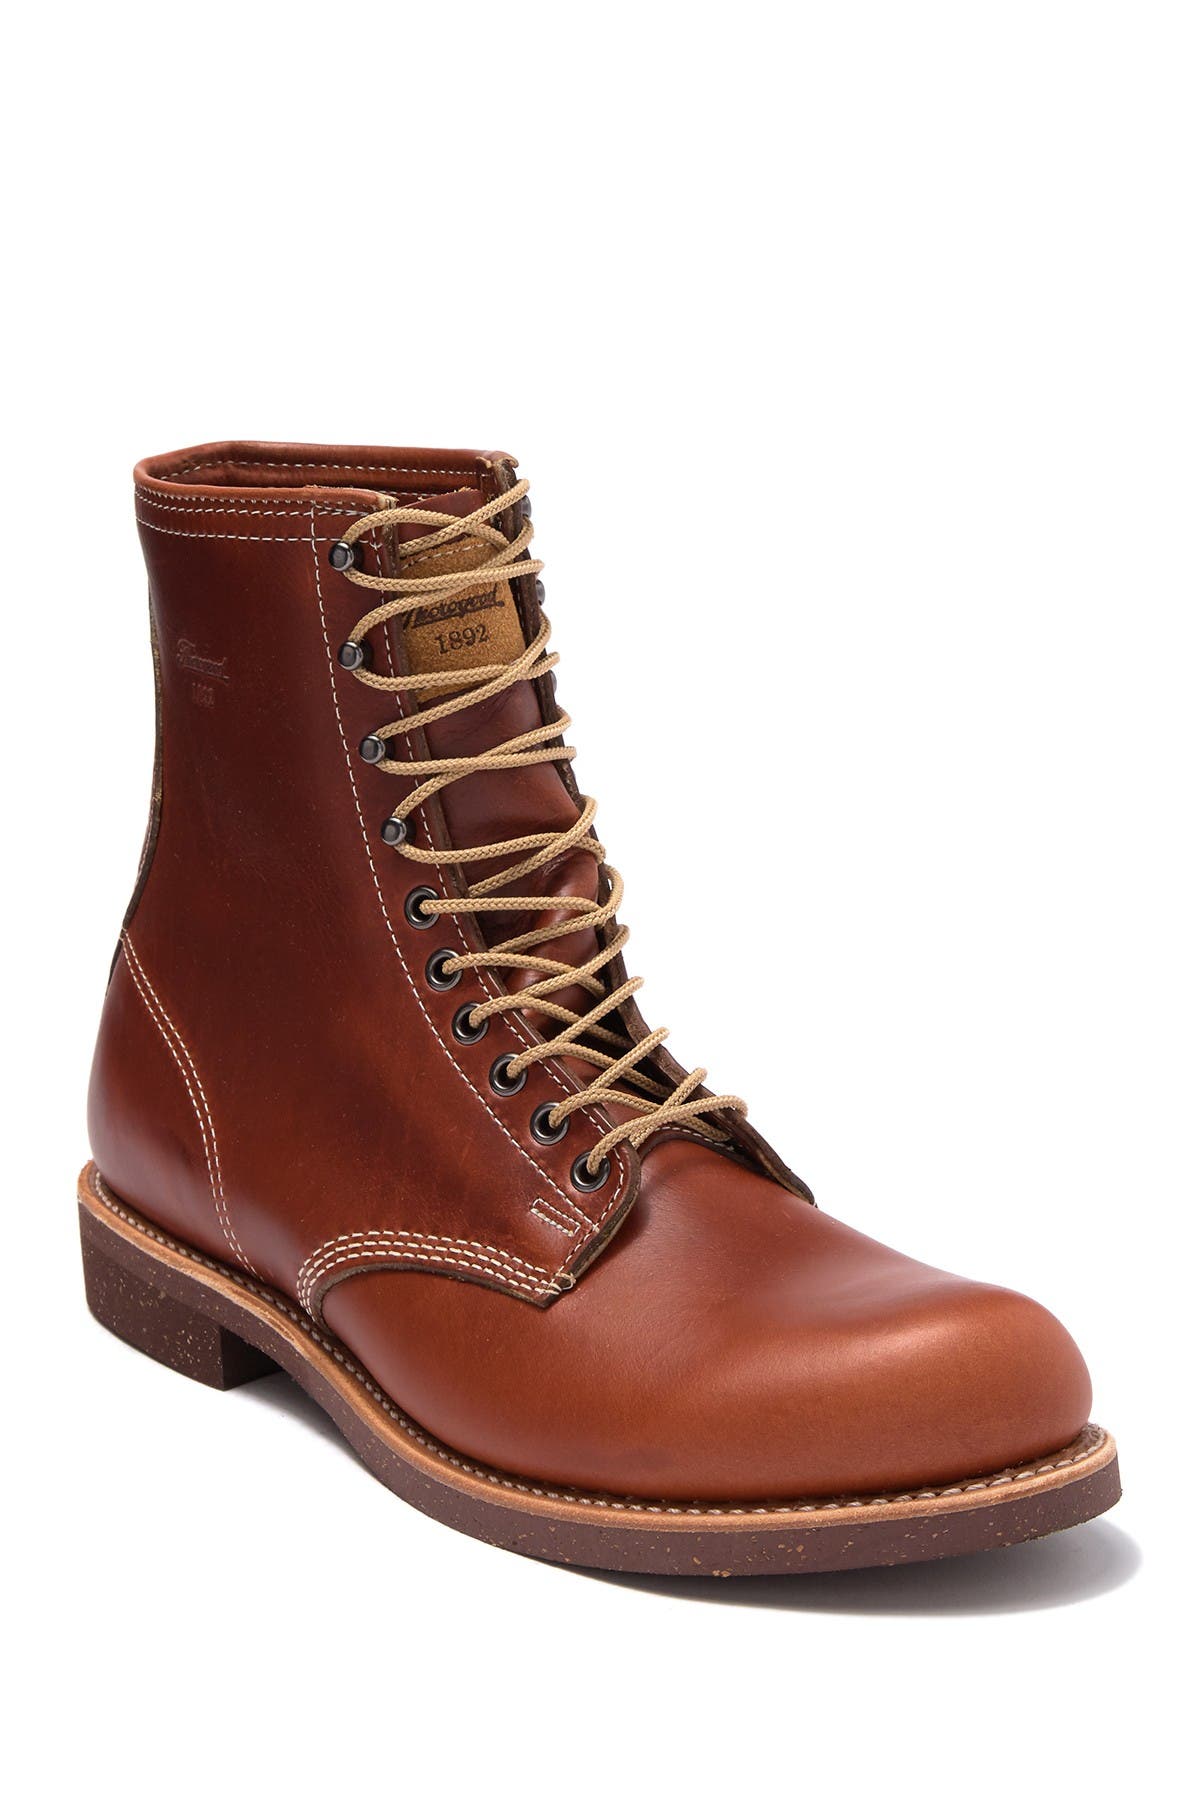 Thorogood | Tomahawk Leather Boot 